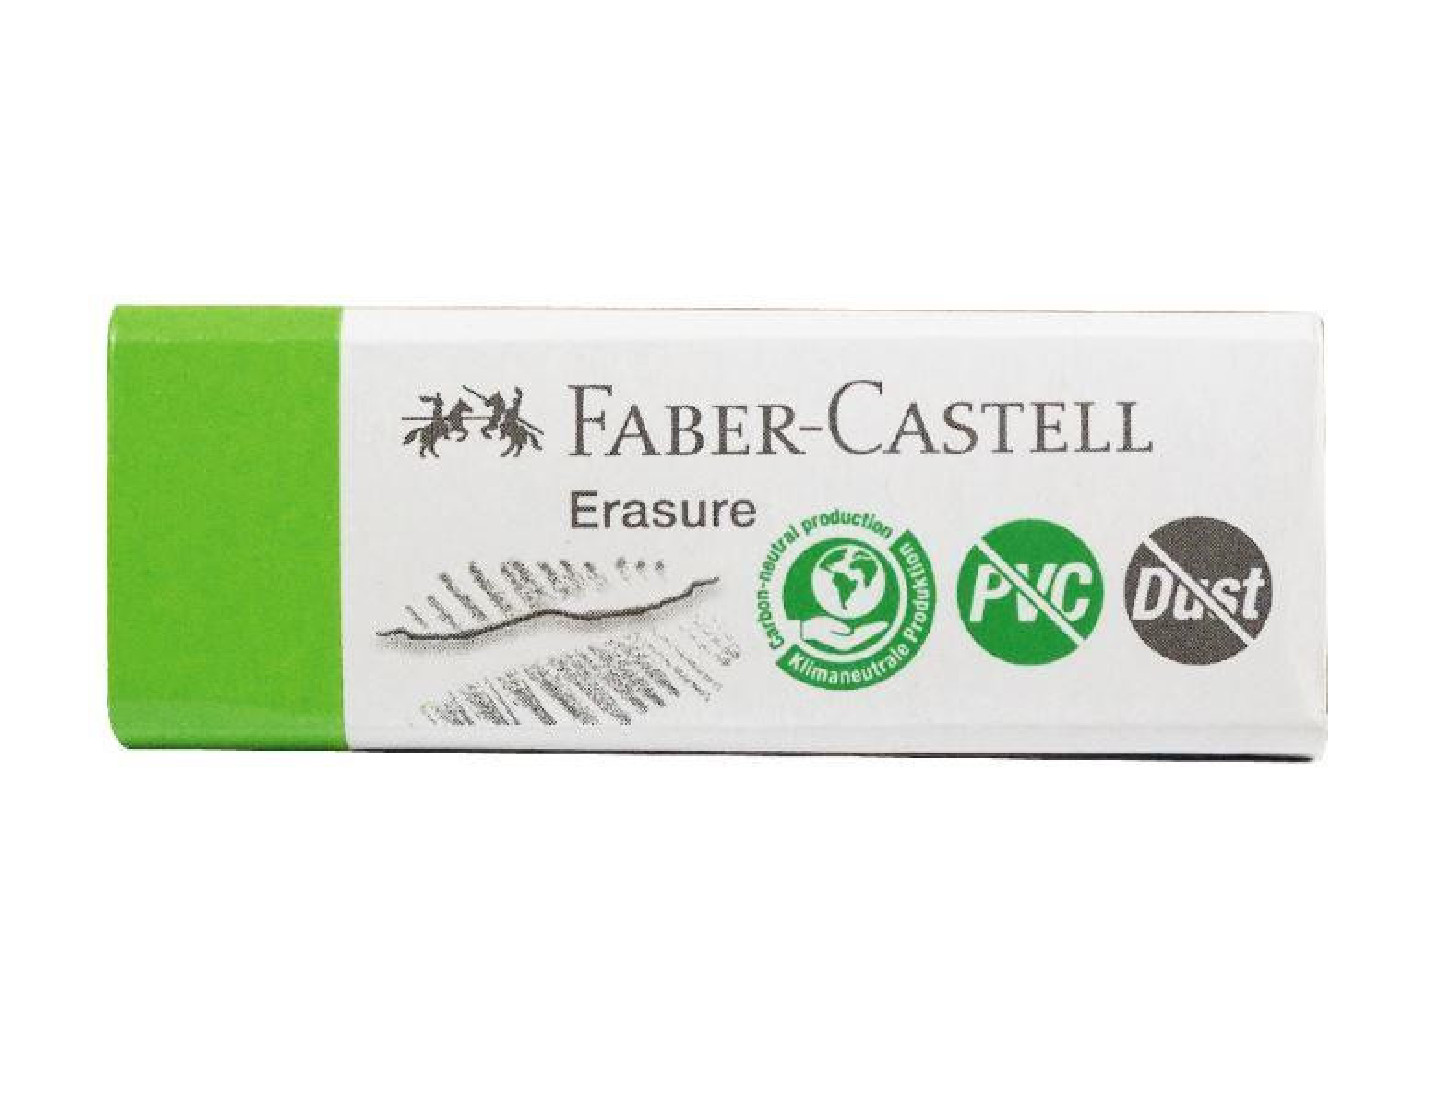 Faber Castell PVC Free Dust Free Green Eraser 187250